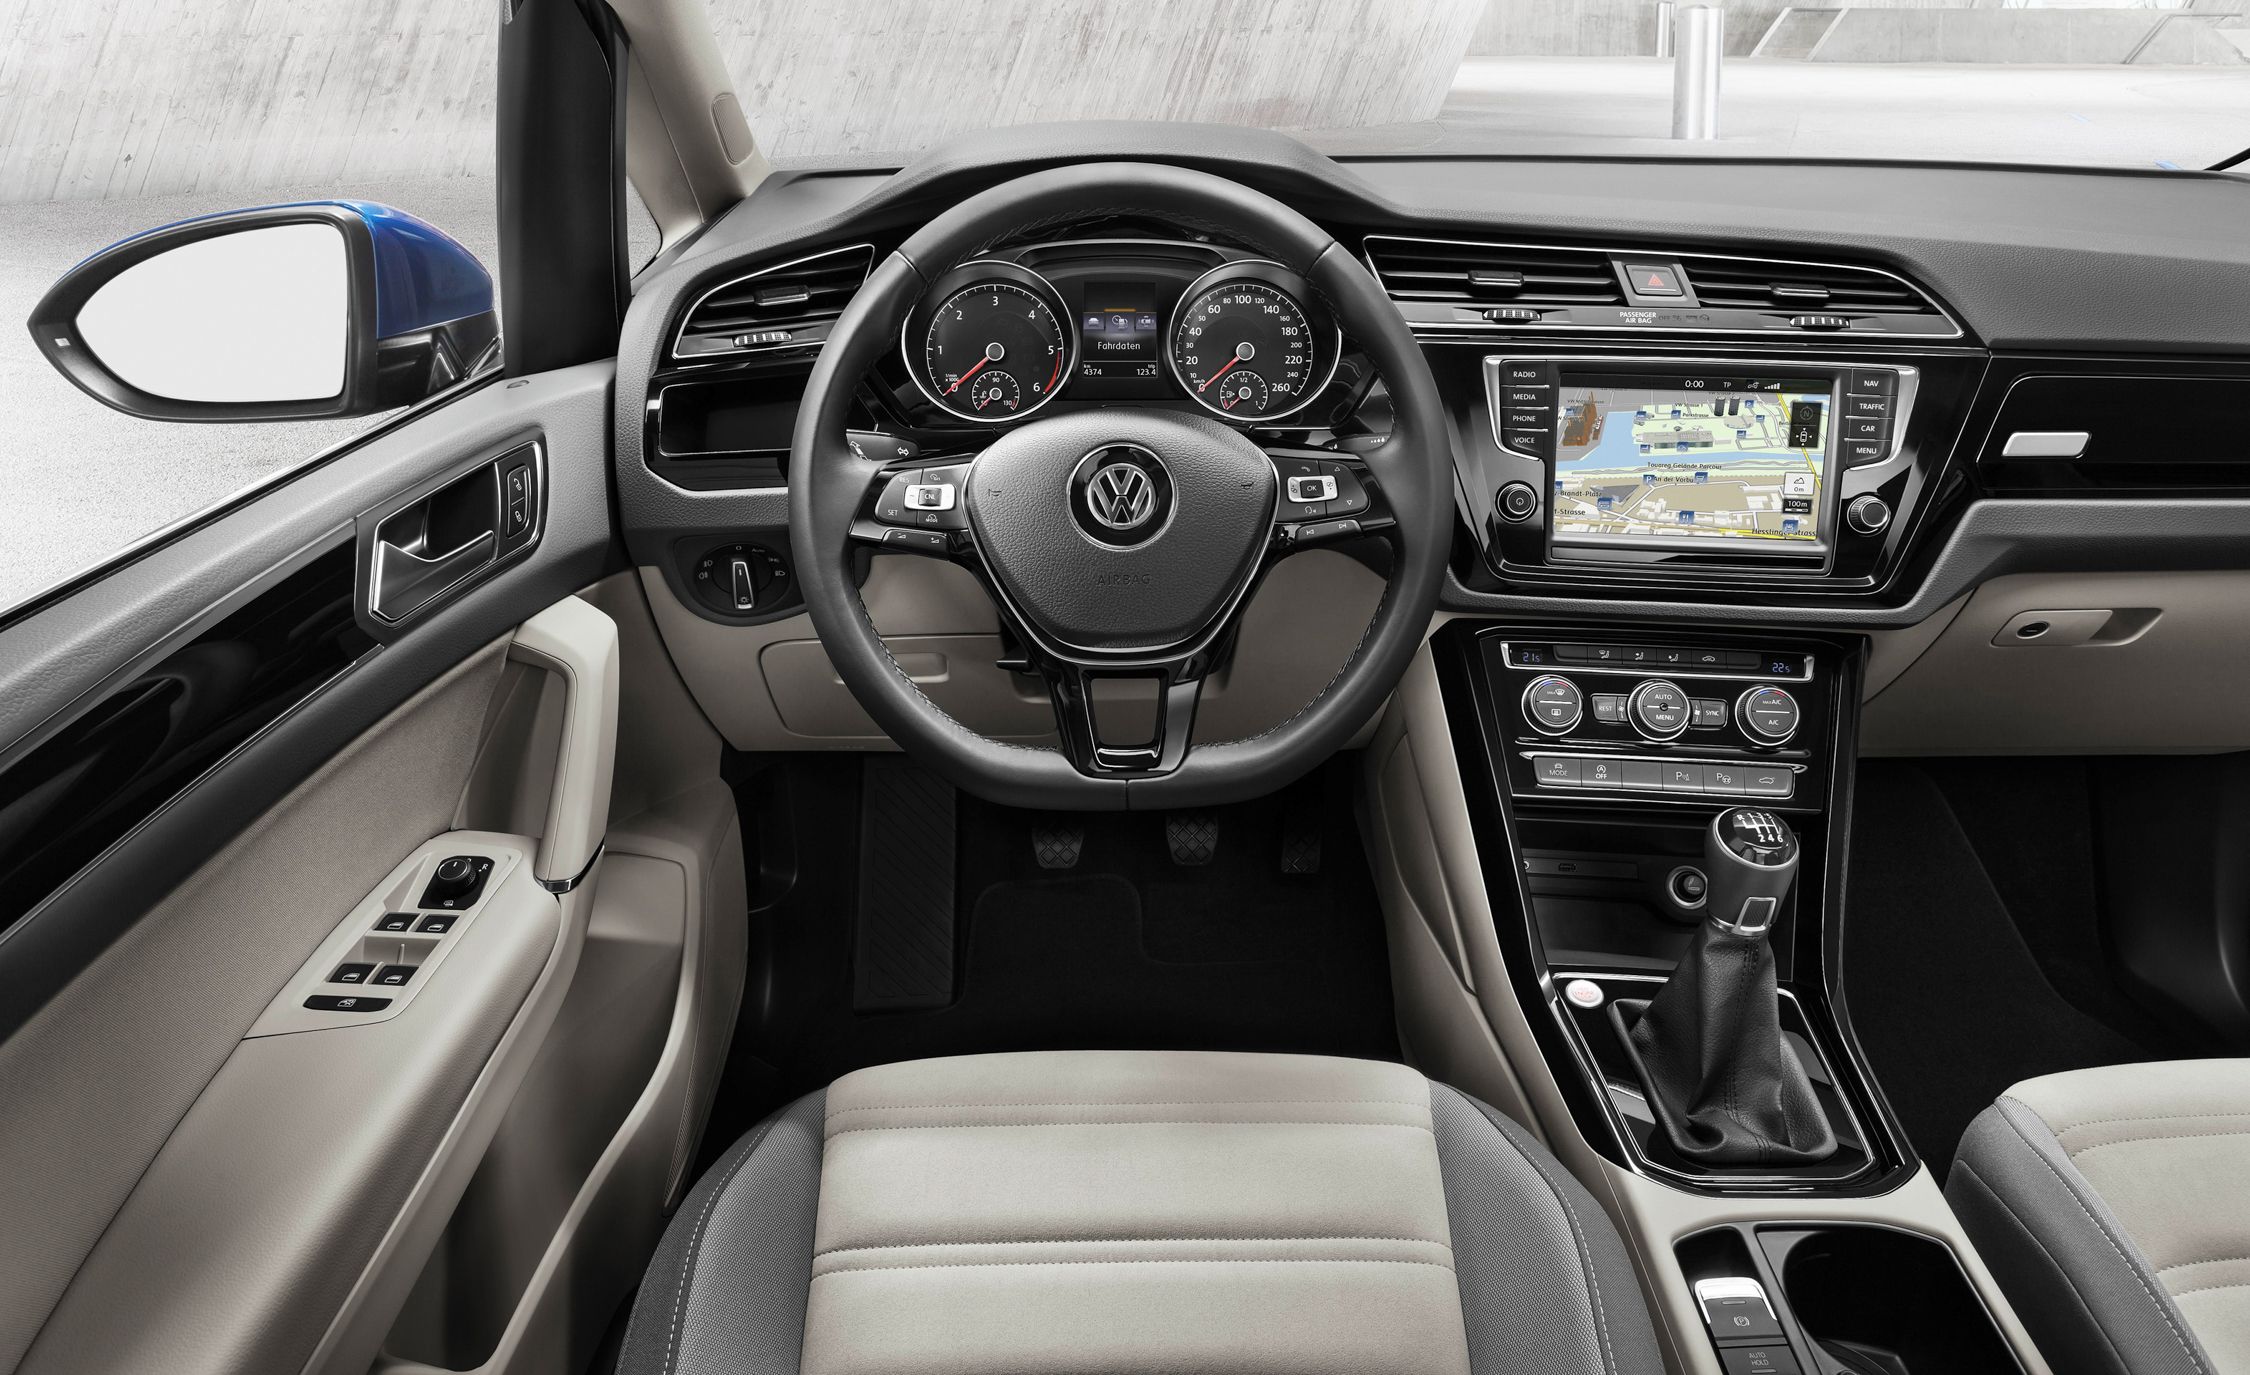 Gering Inpakken As All-New Volkswagen Touran Debuts – News – Car and Driver